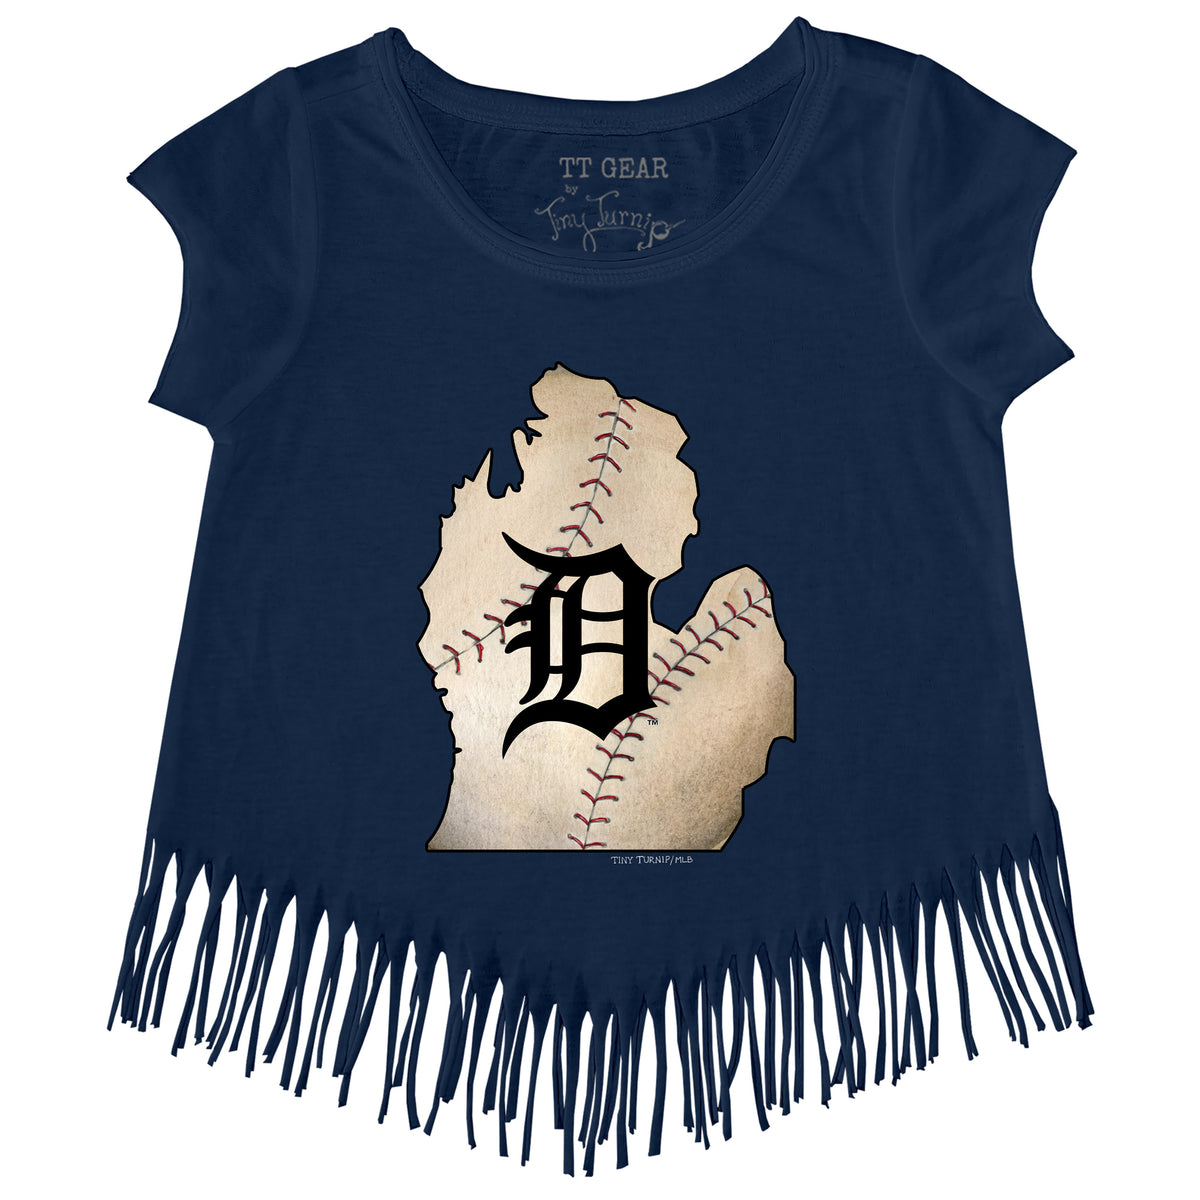 Official Detroit Tigers T-Shirts, Tigers Shirt, Tigers Tees, Tank